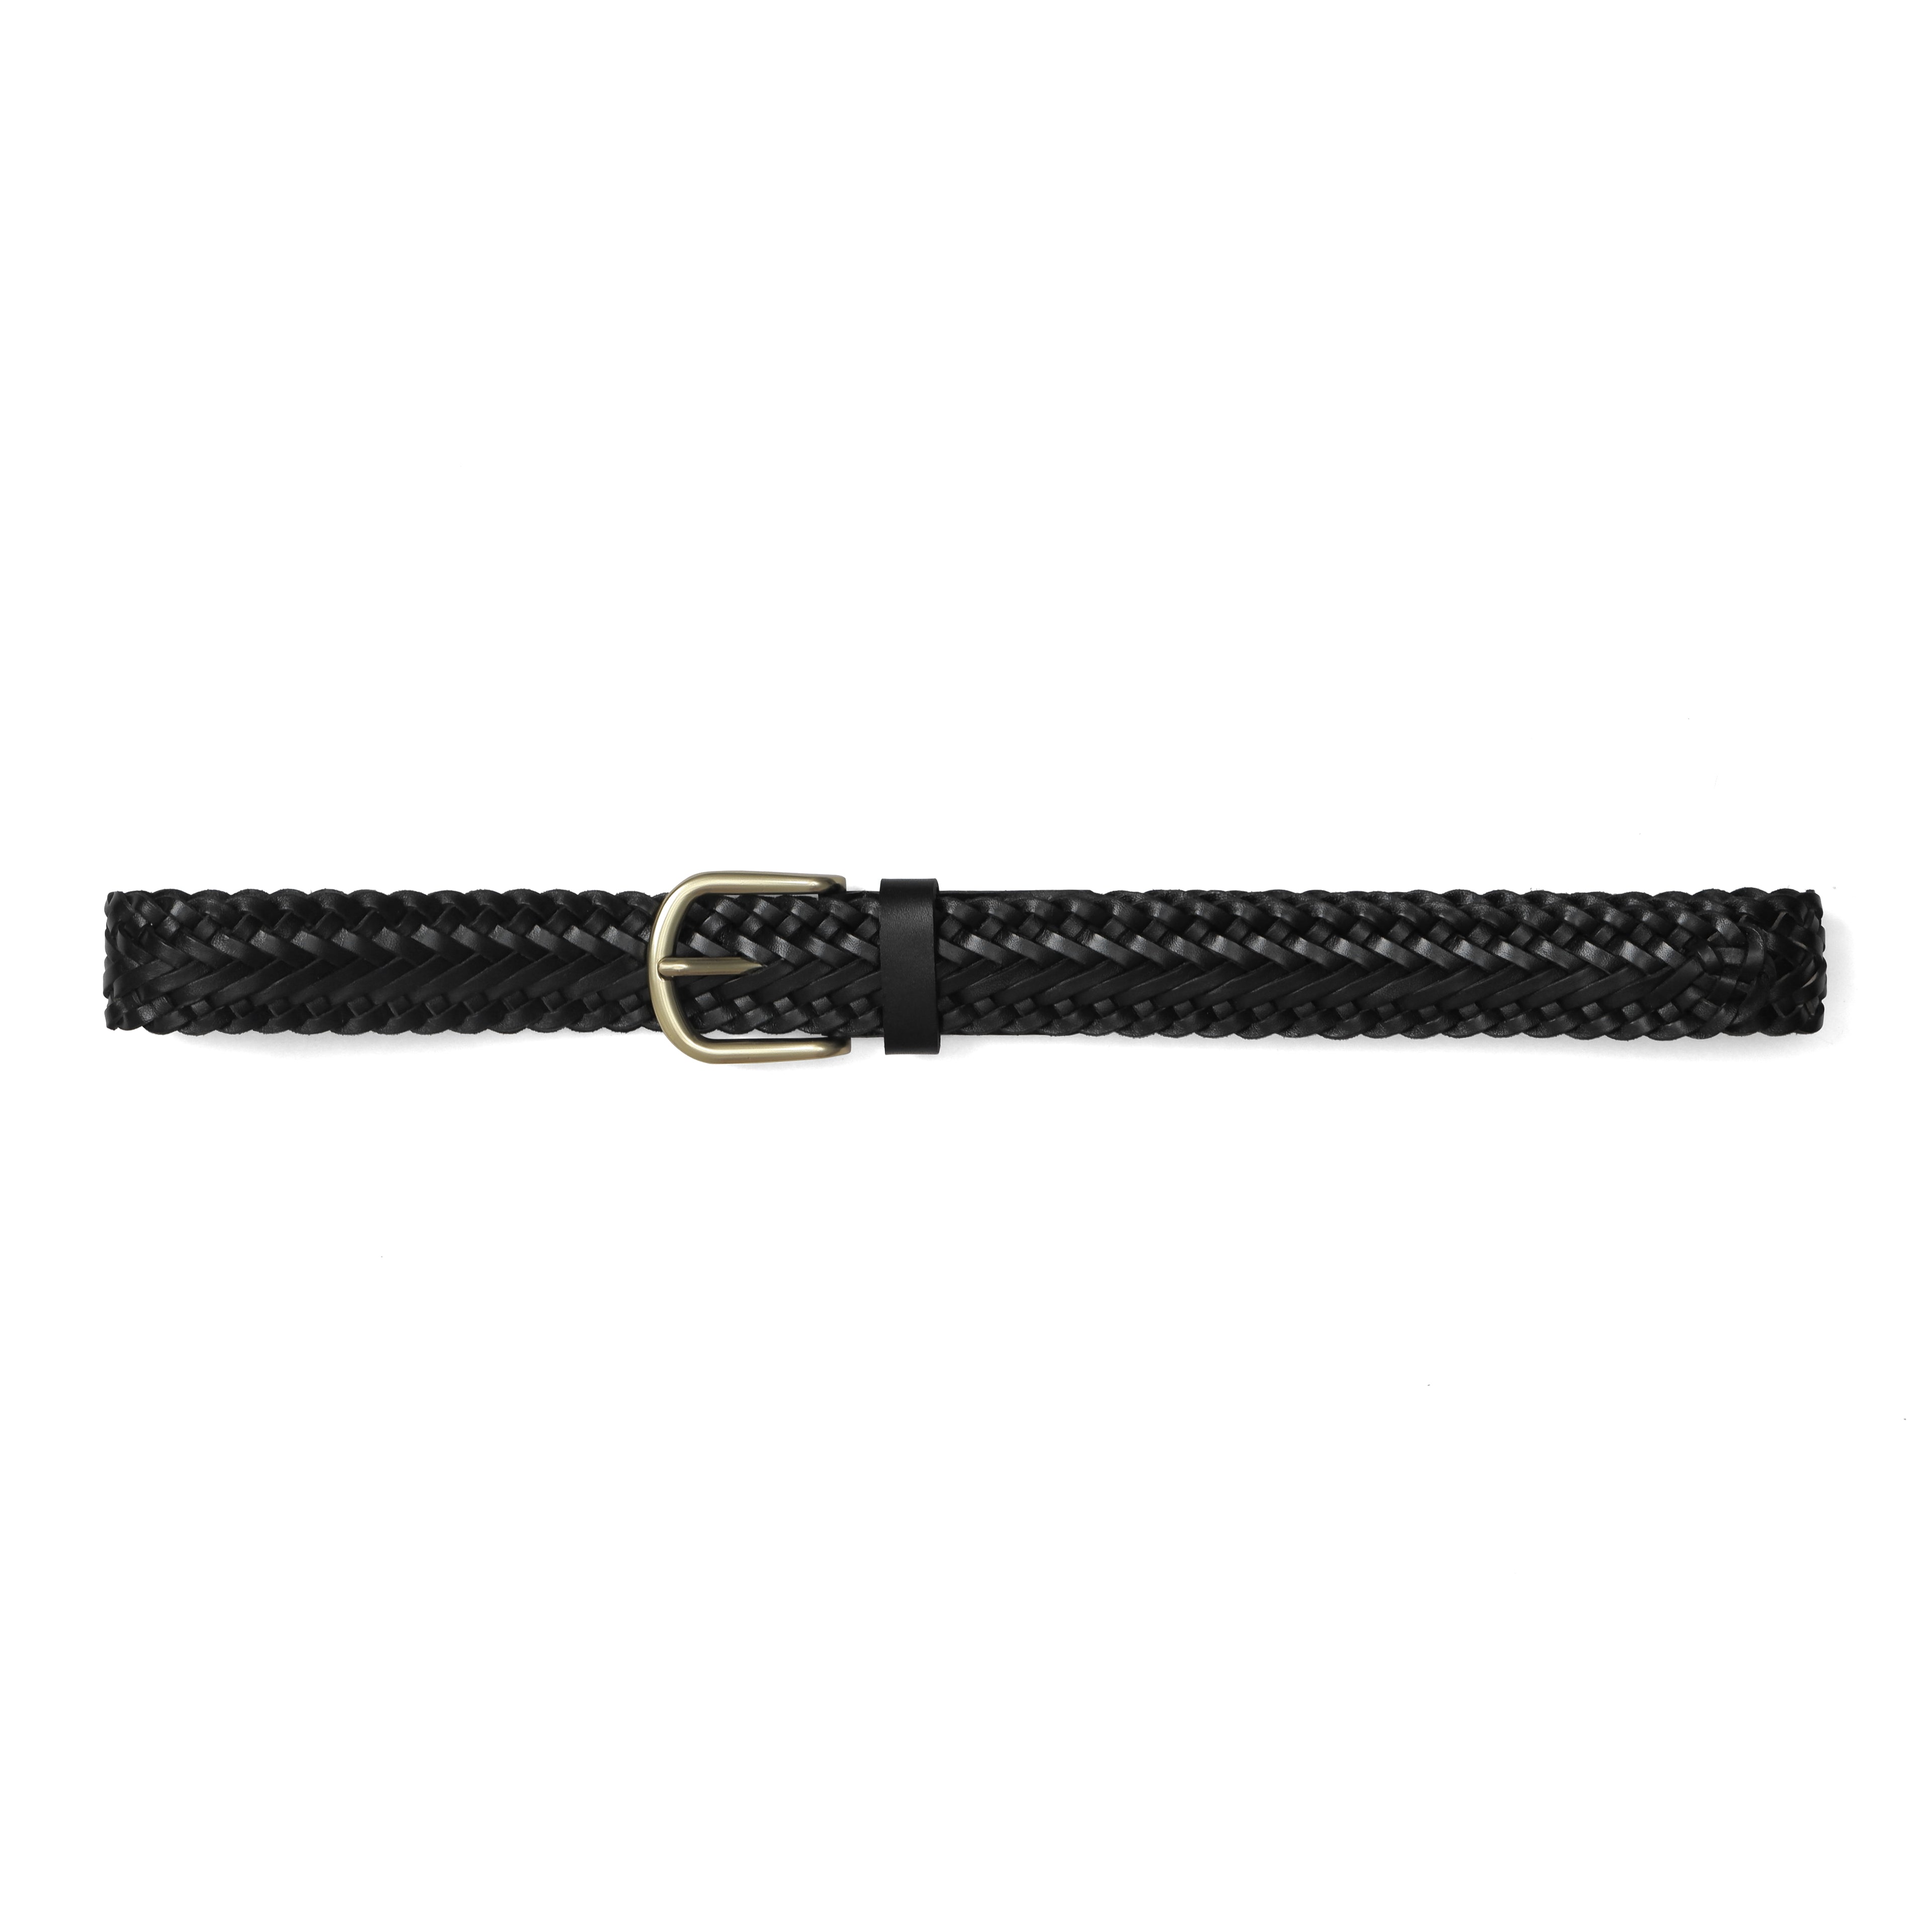 Black Braided Leather Belt